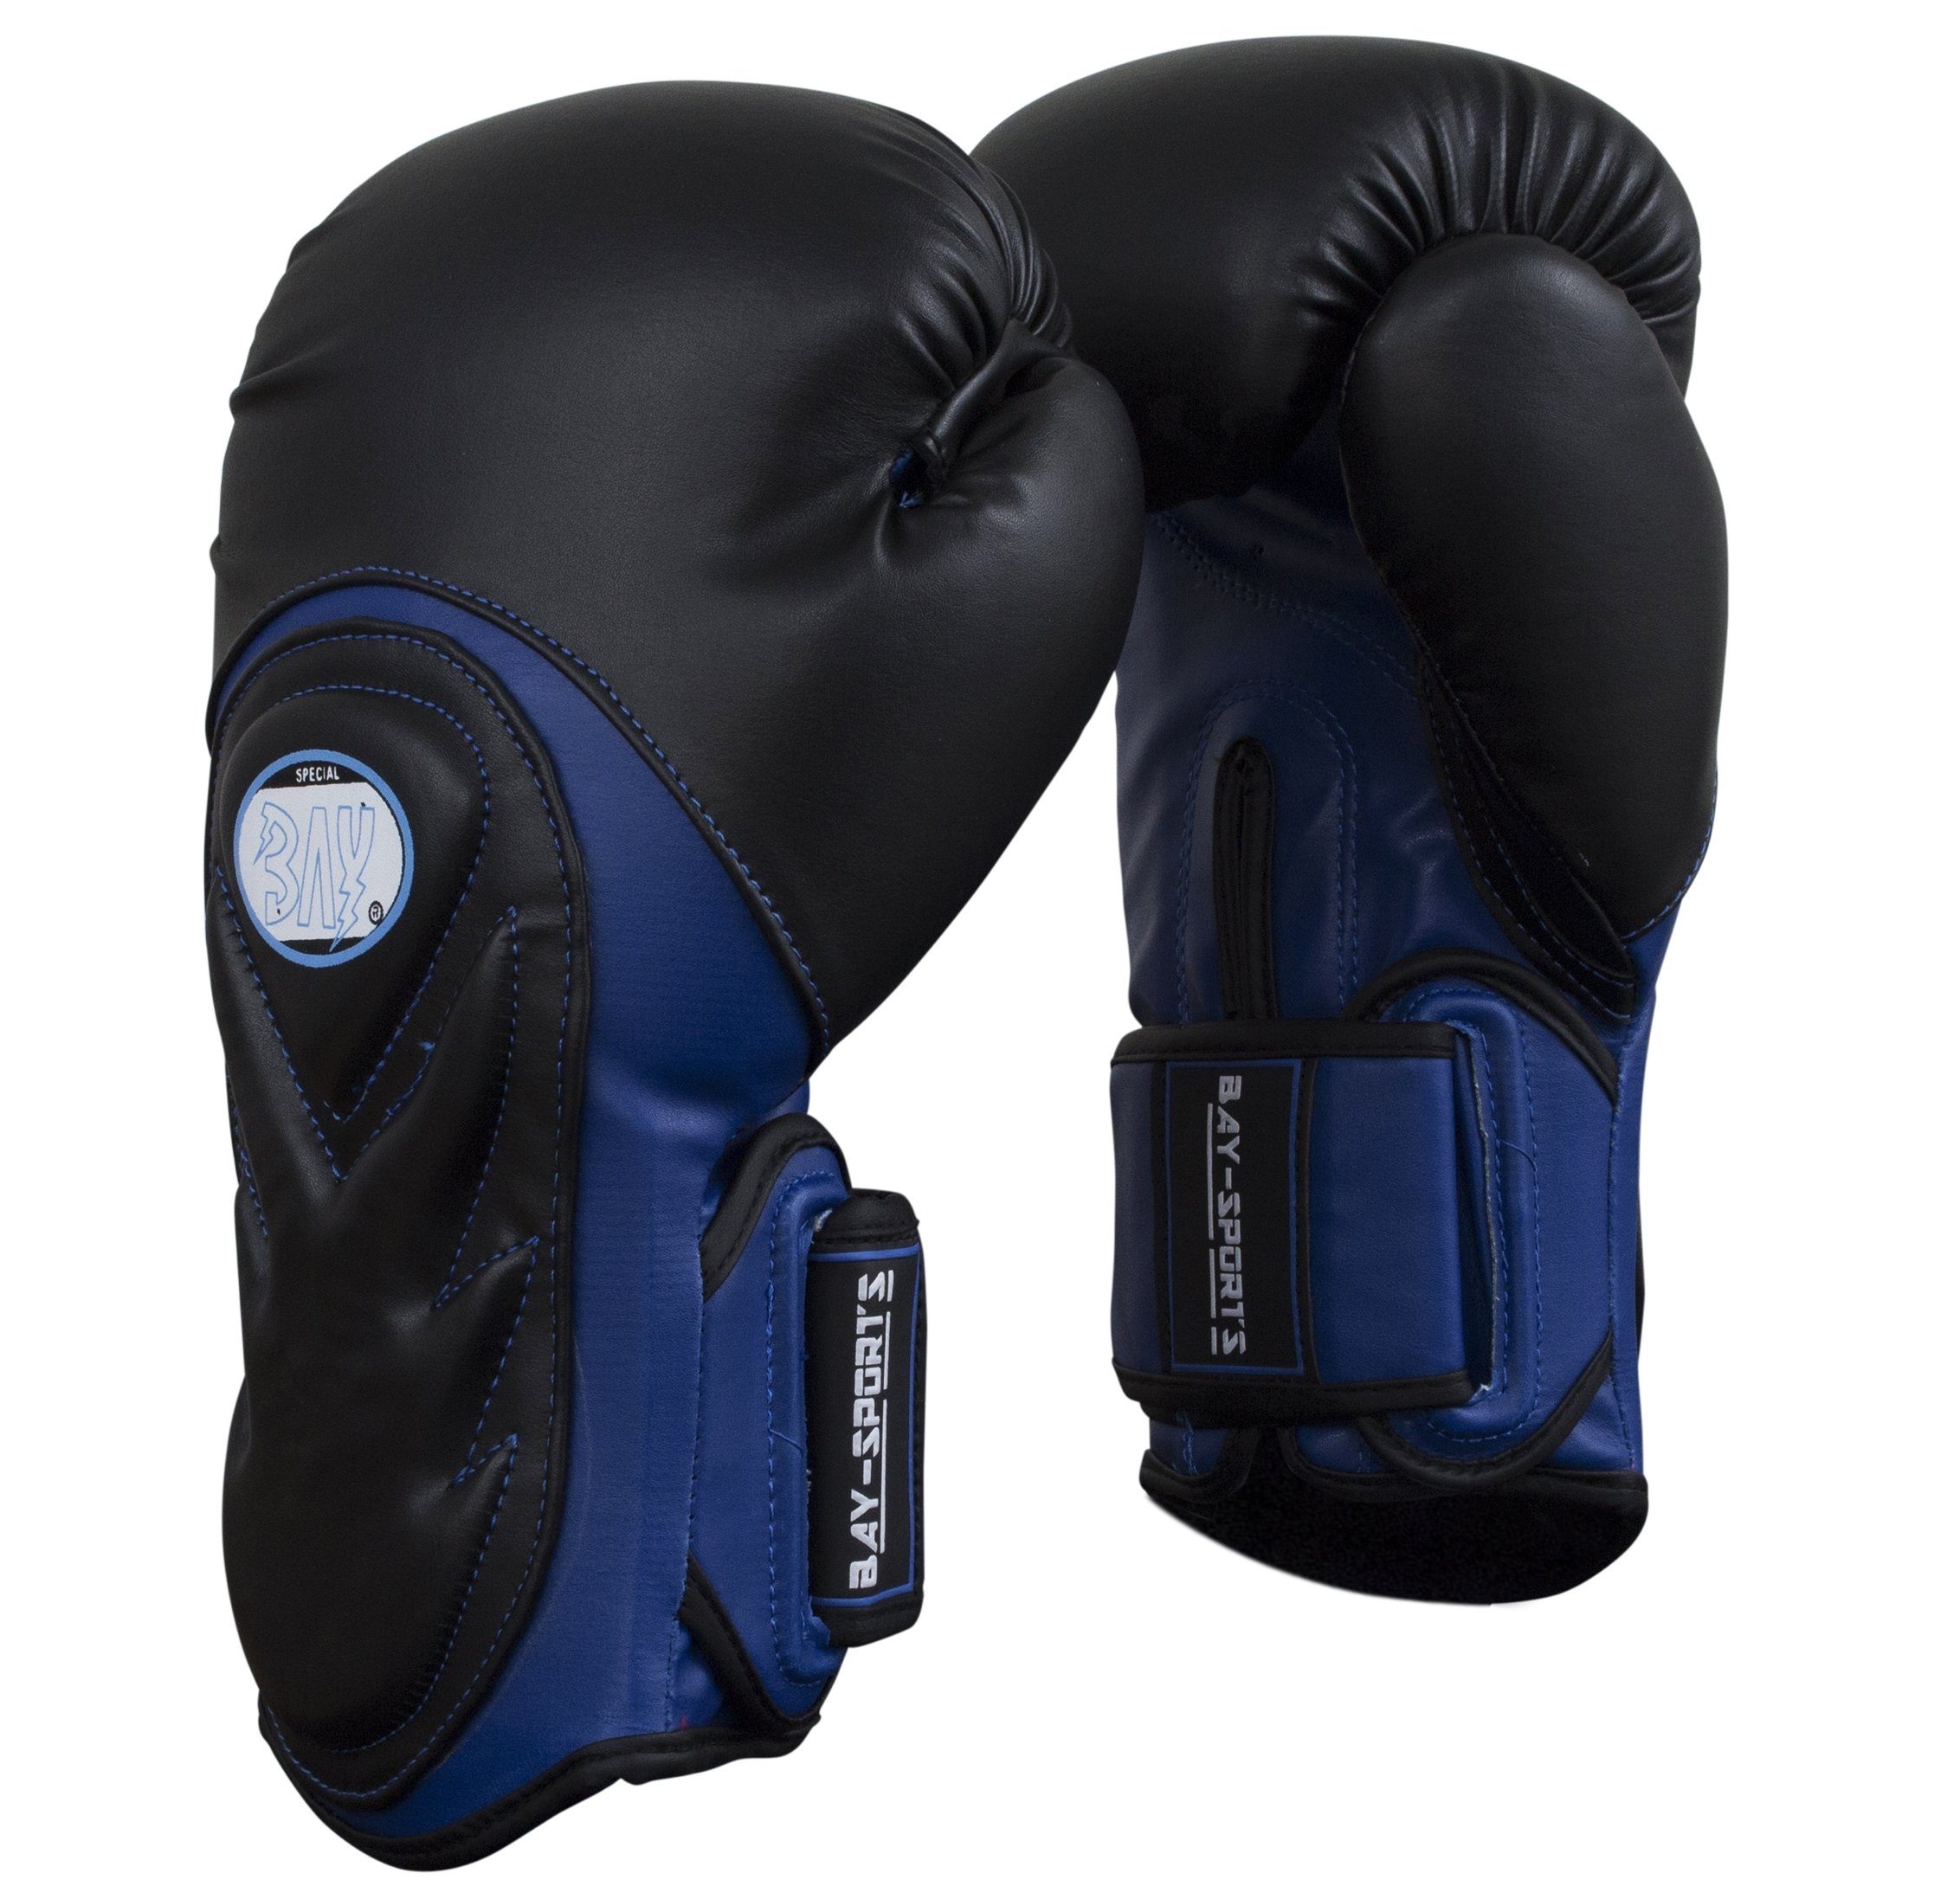 BAY-Sports Box-Handschuhe Boxhandschuhe Boxen schwarz/blau Kickboxen Style Bad